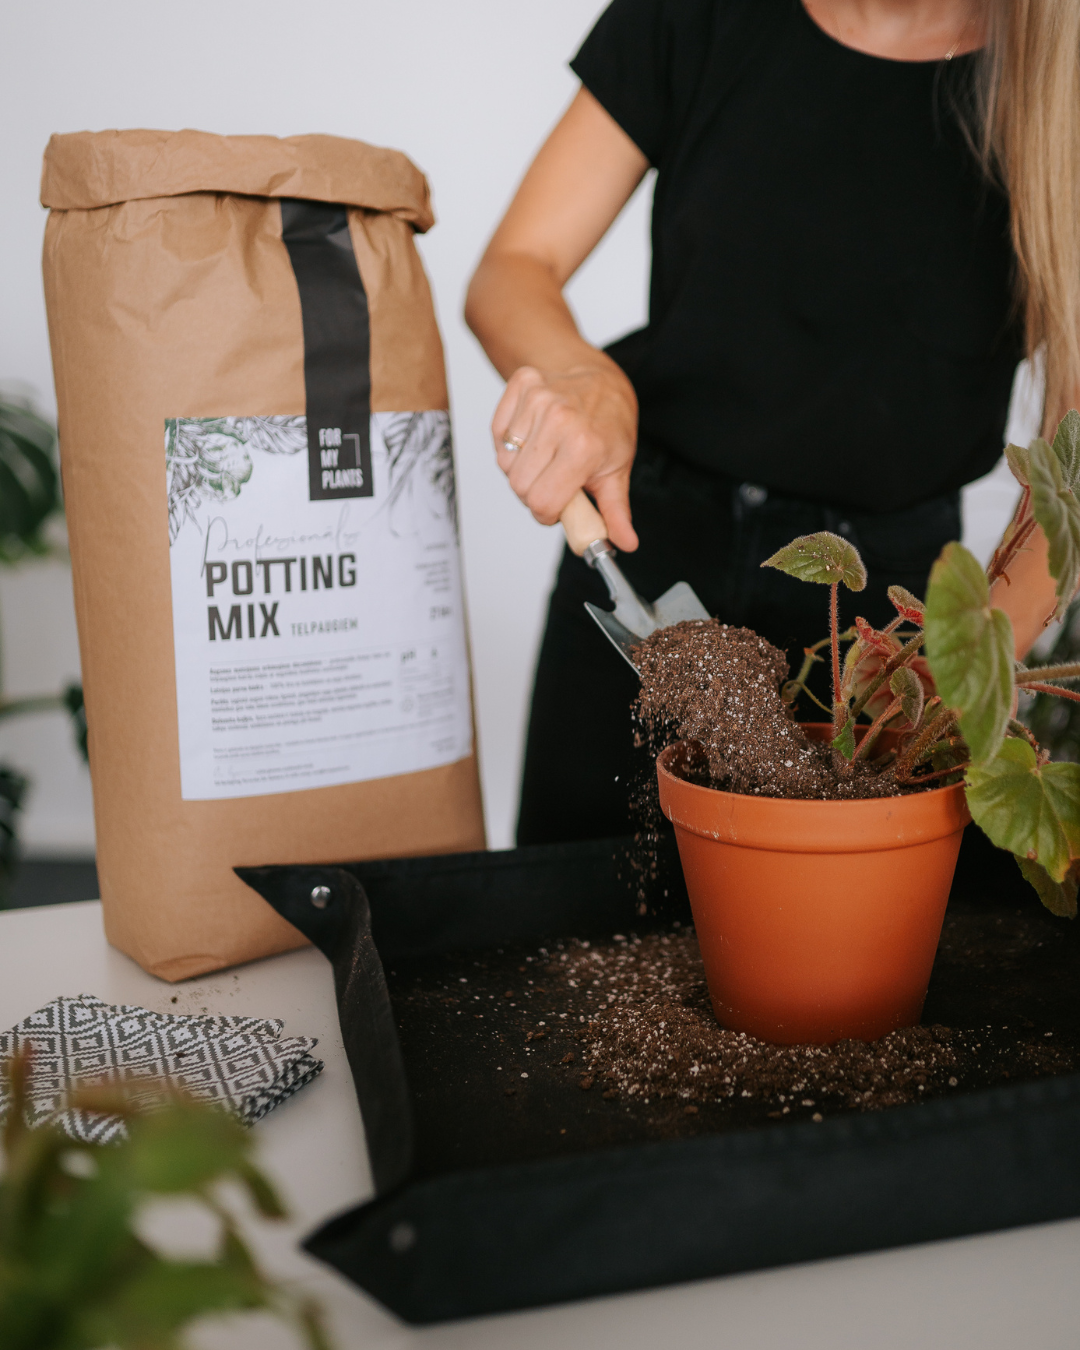 Potting Mix (2 x 27 liters) for houseplants